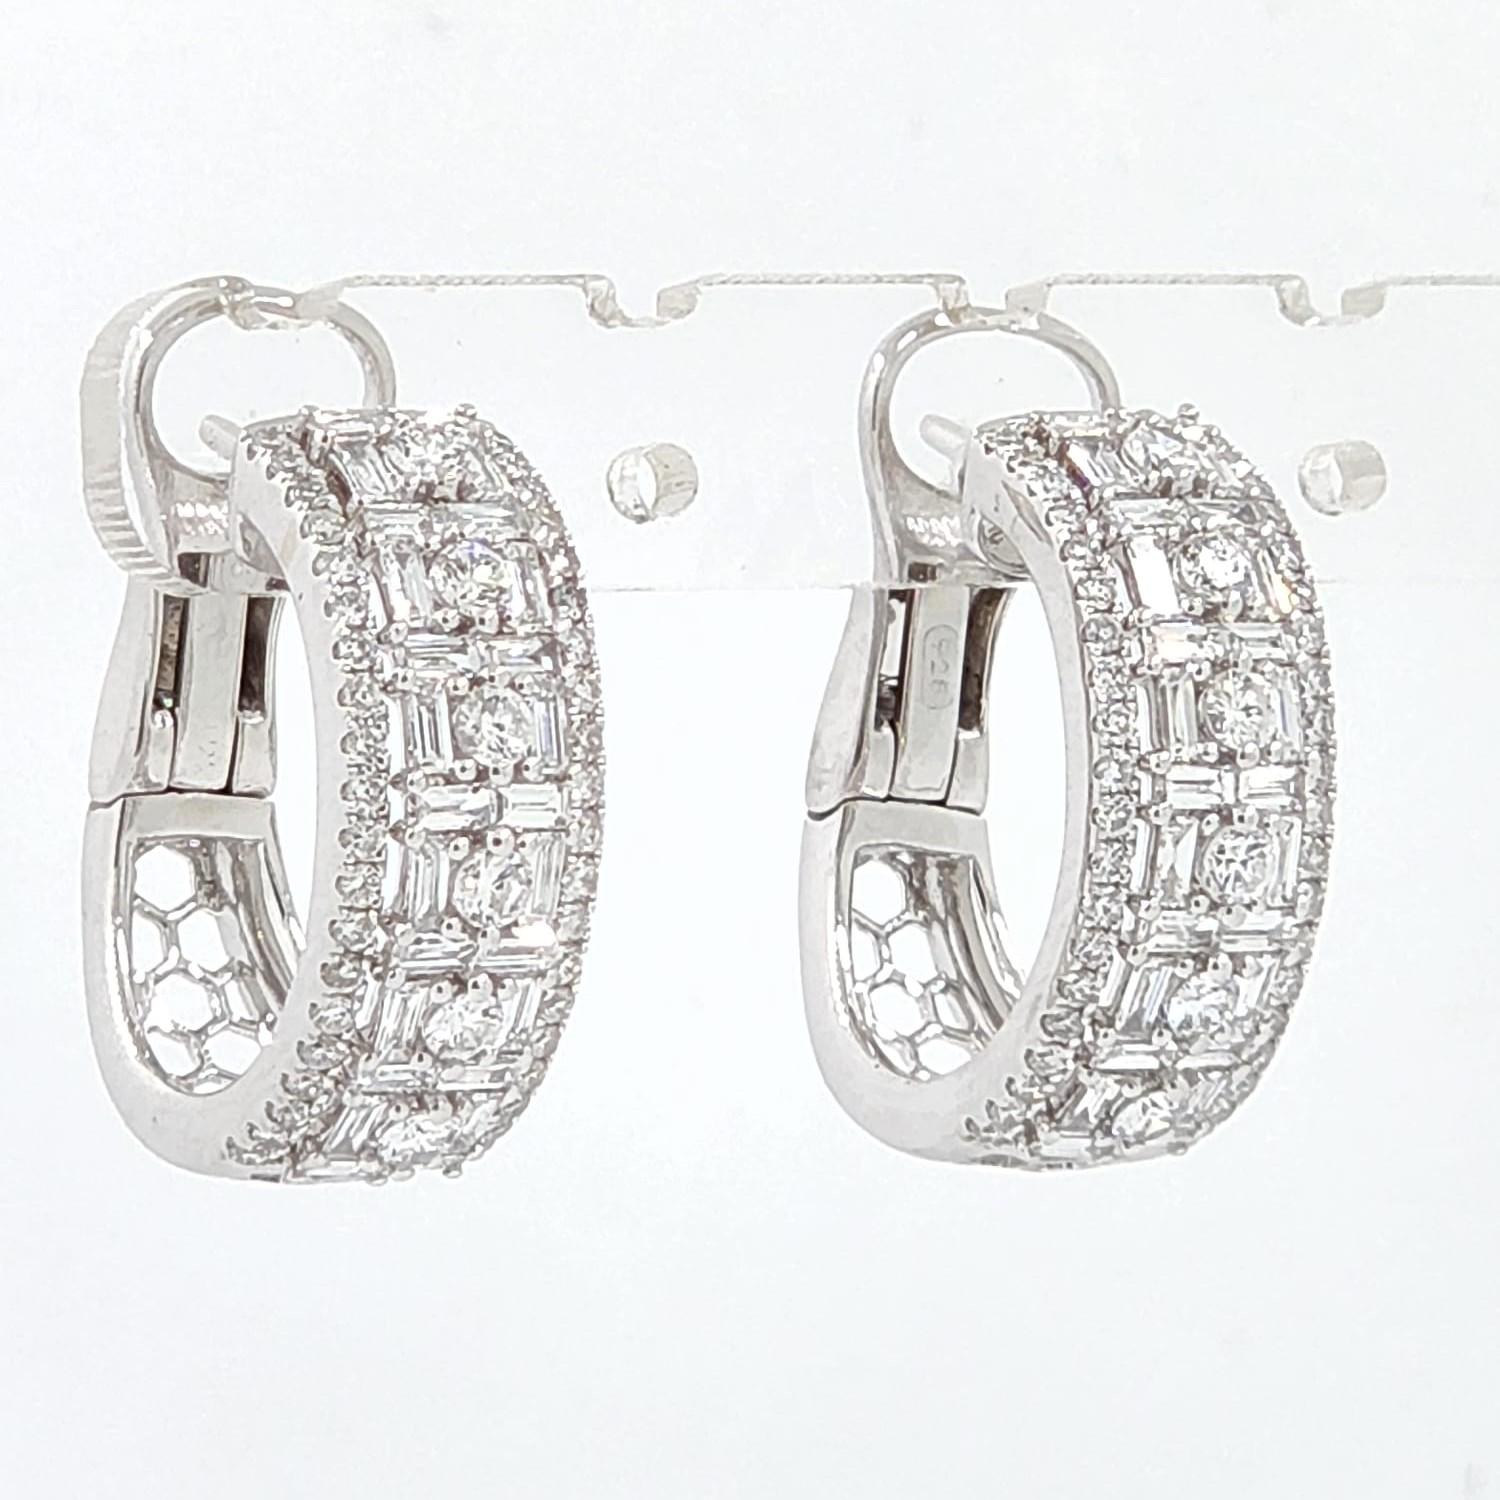 Contemporary Taper Diamond Hoop Earrings in 18 Karat White Gold